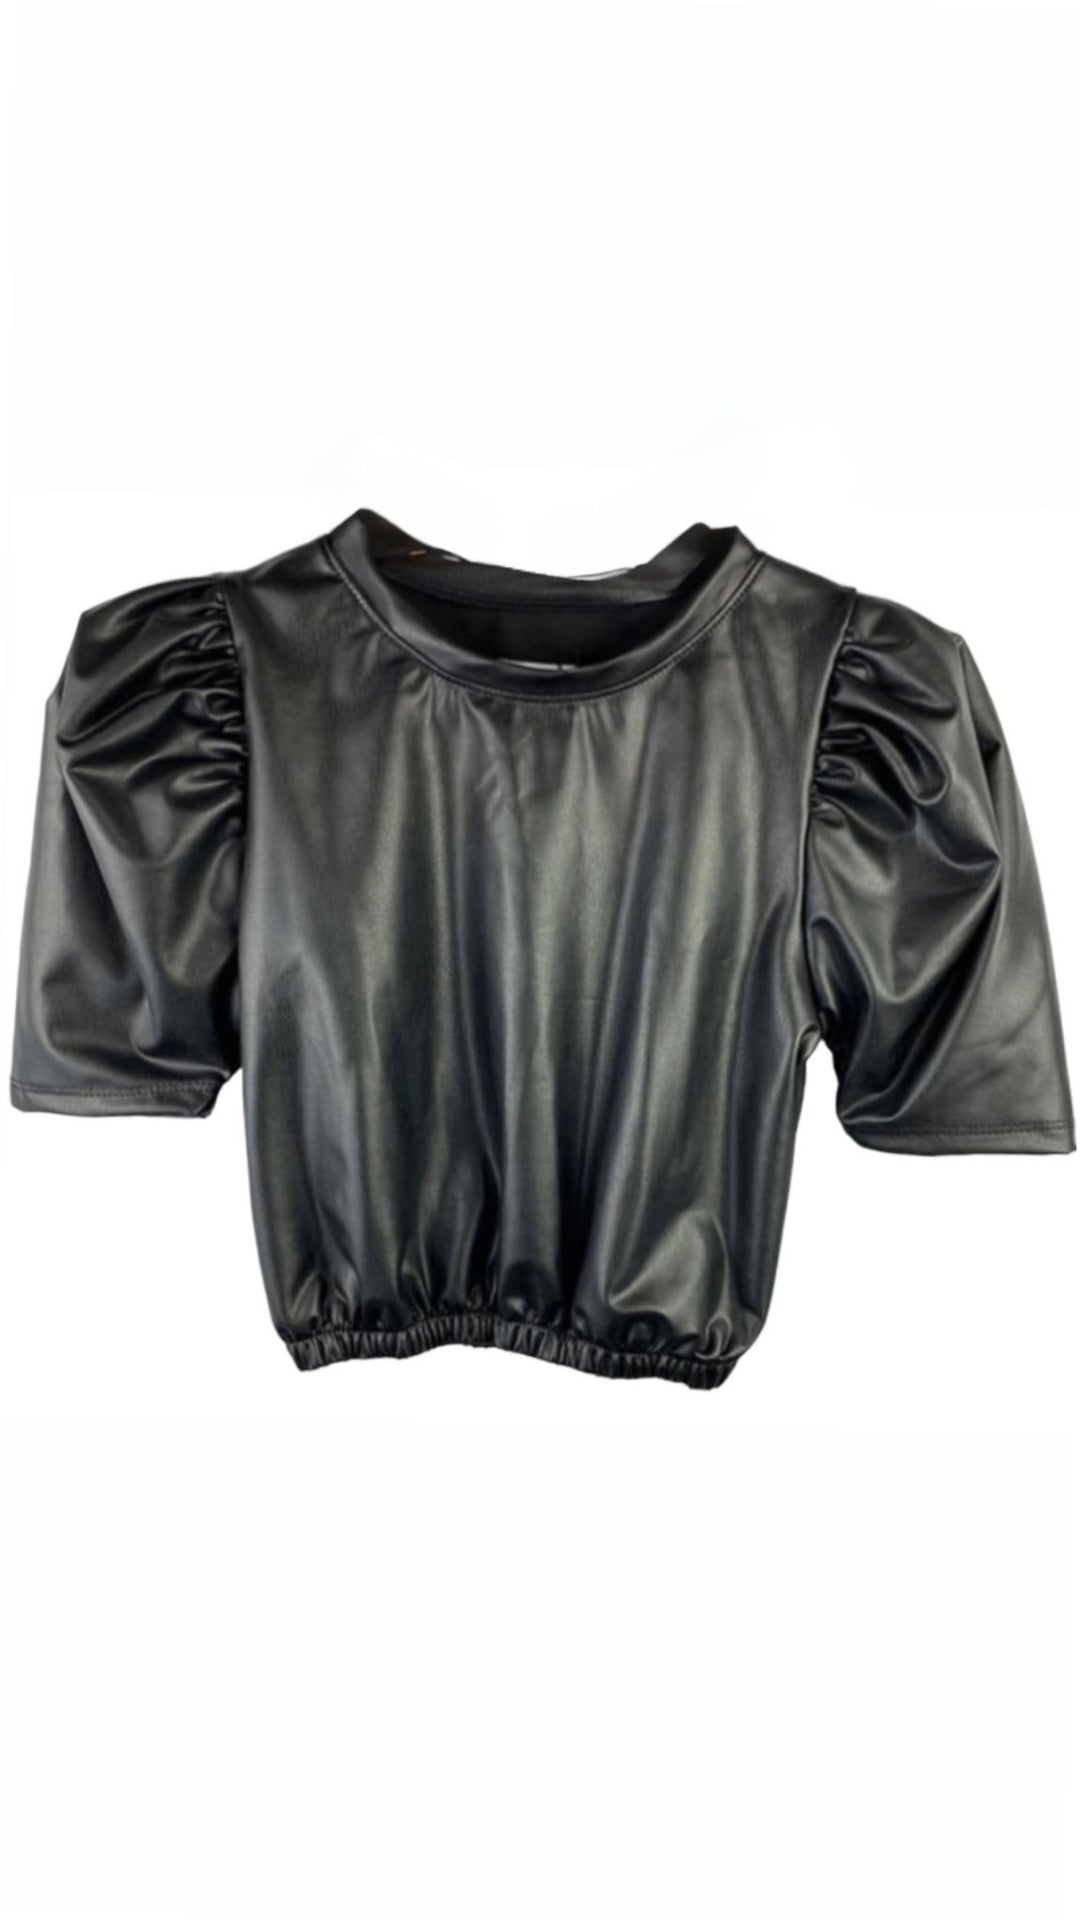 Black Leather Puff Sleeve Top - jernijacks